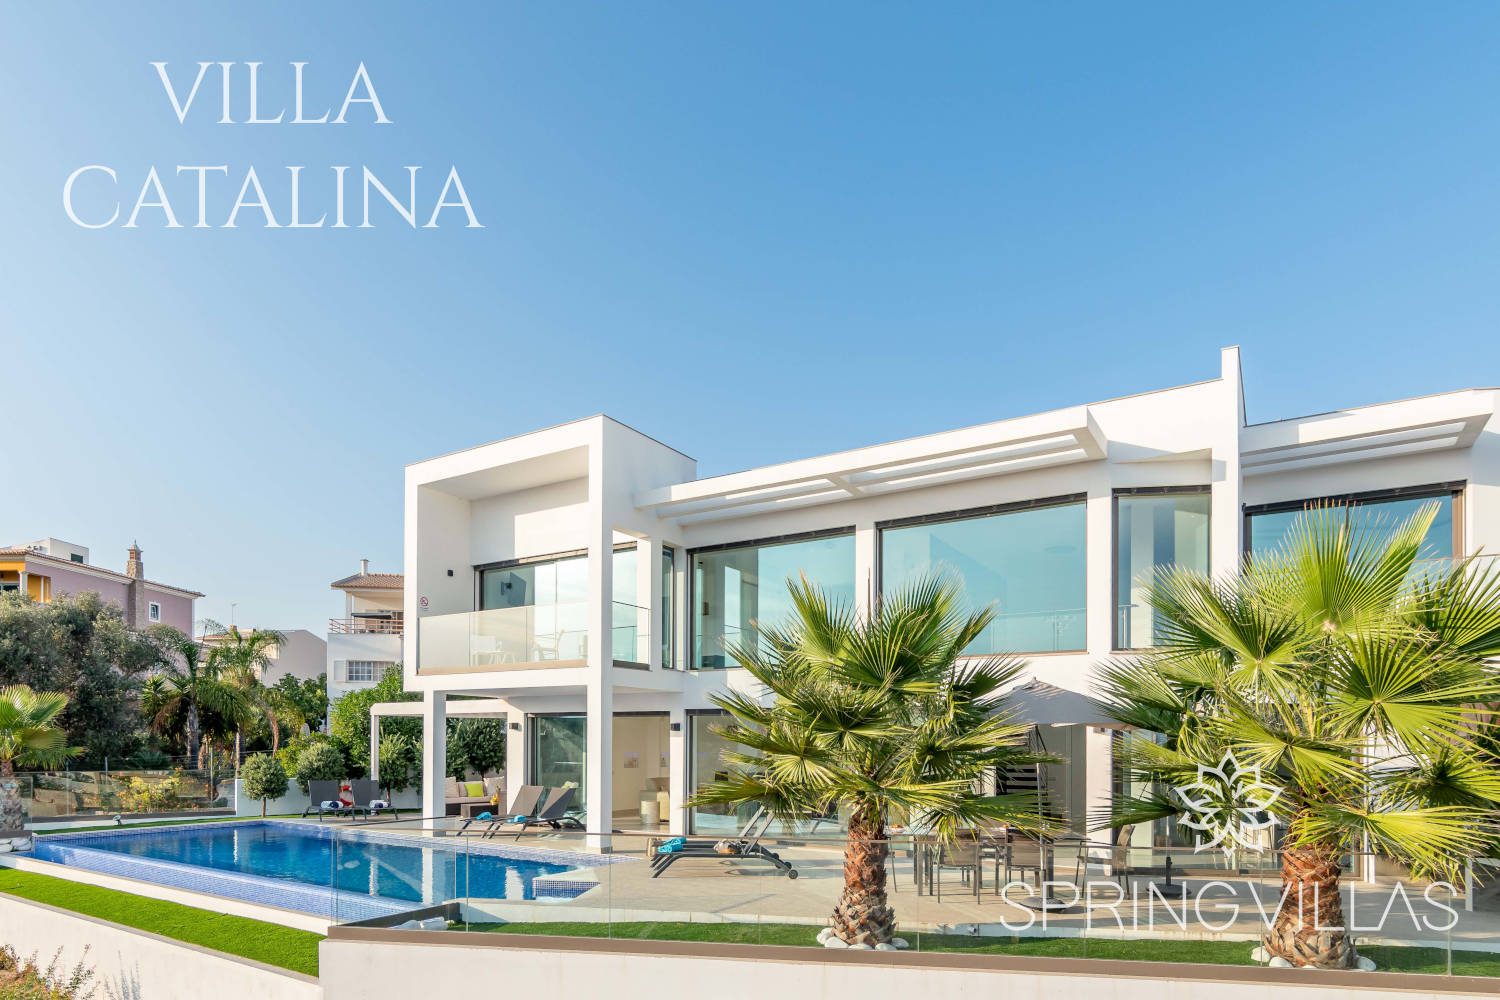 Villa Catalina - Gallery